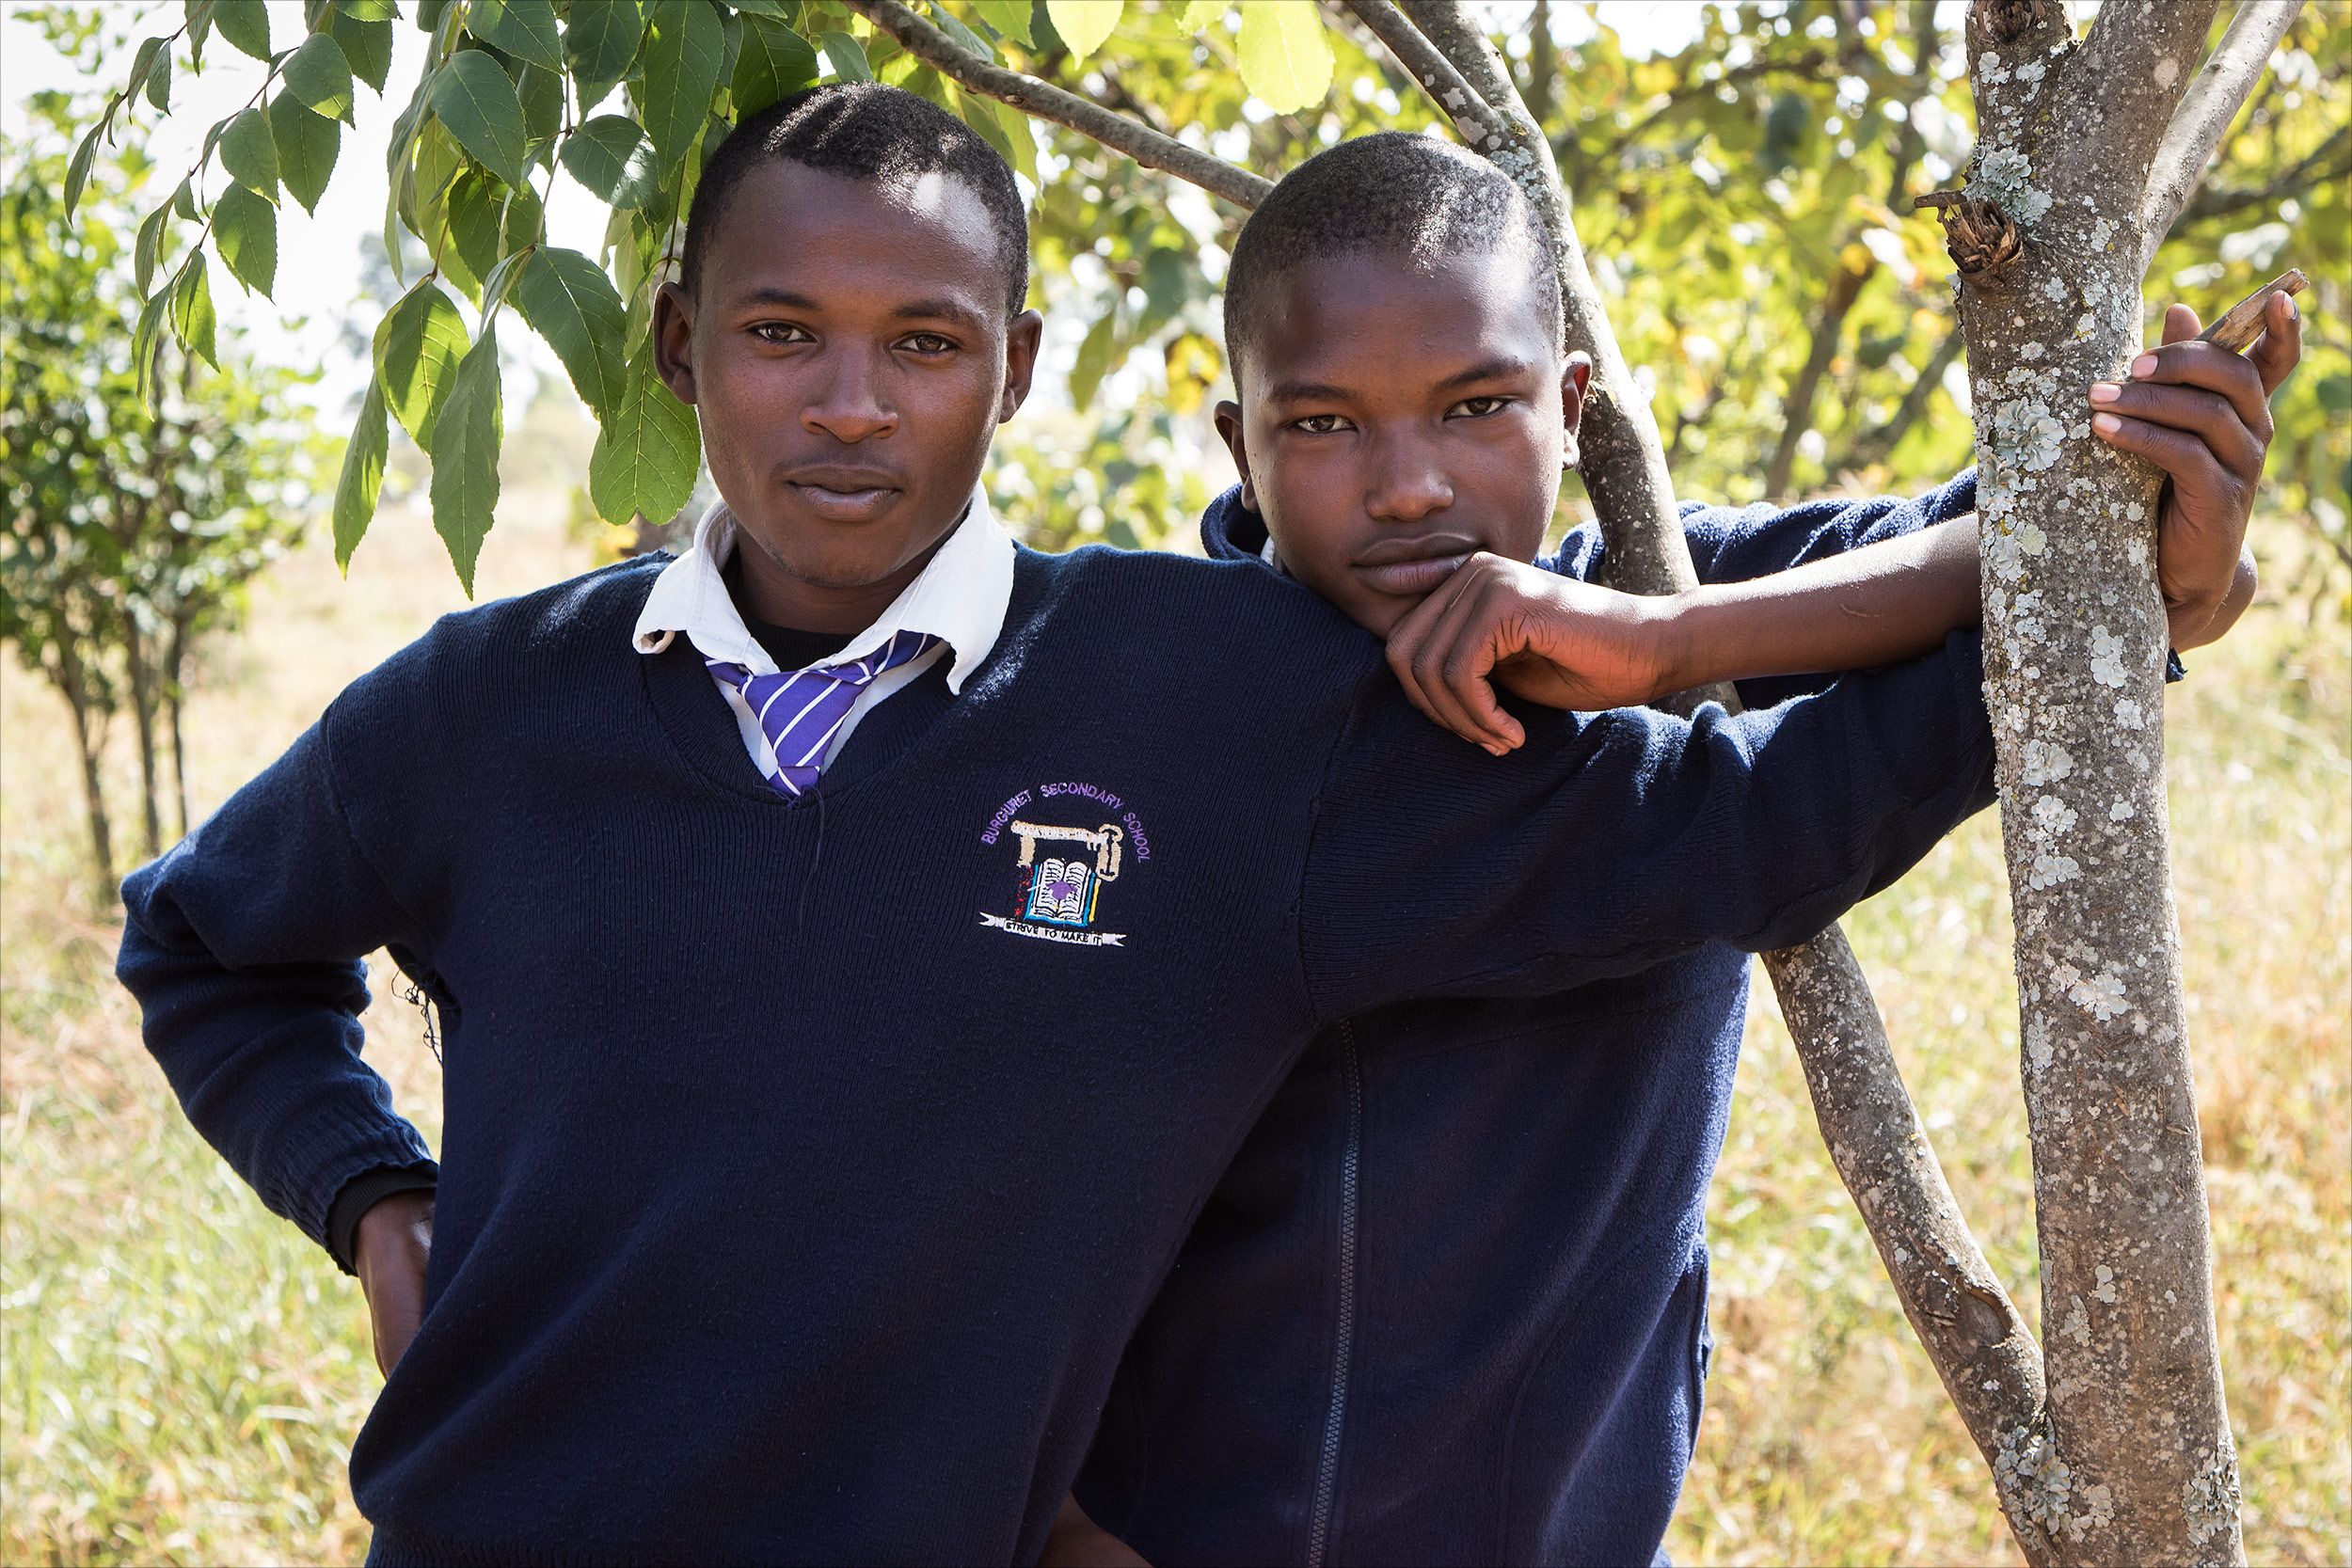 Secondary school students, Kenya